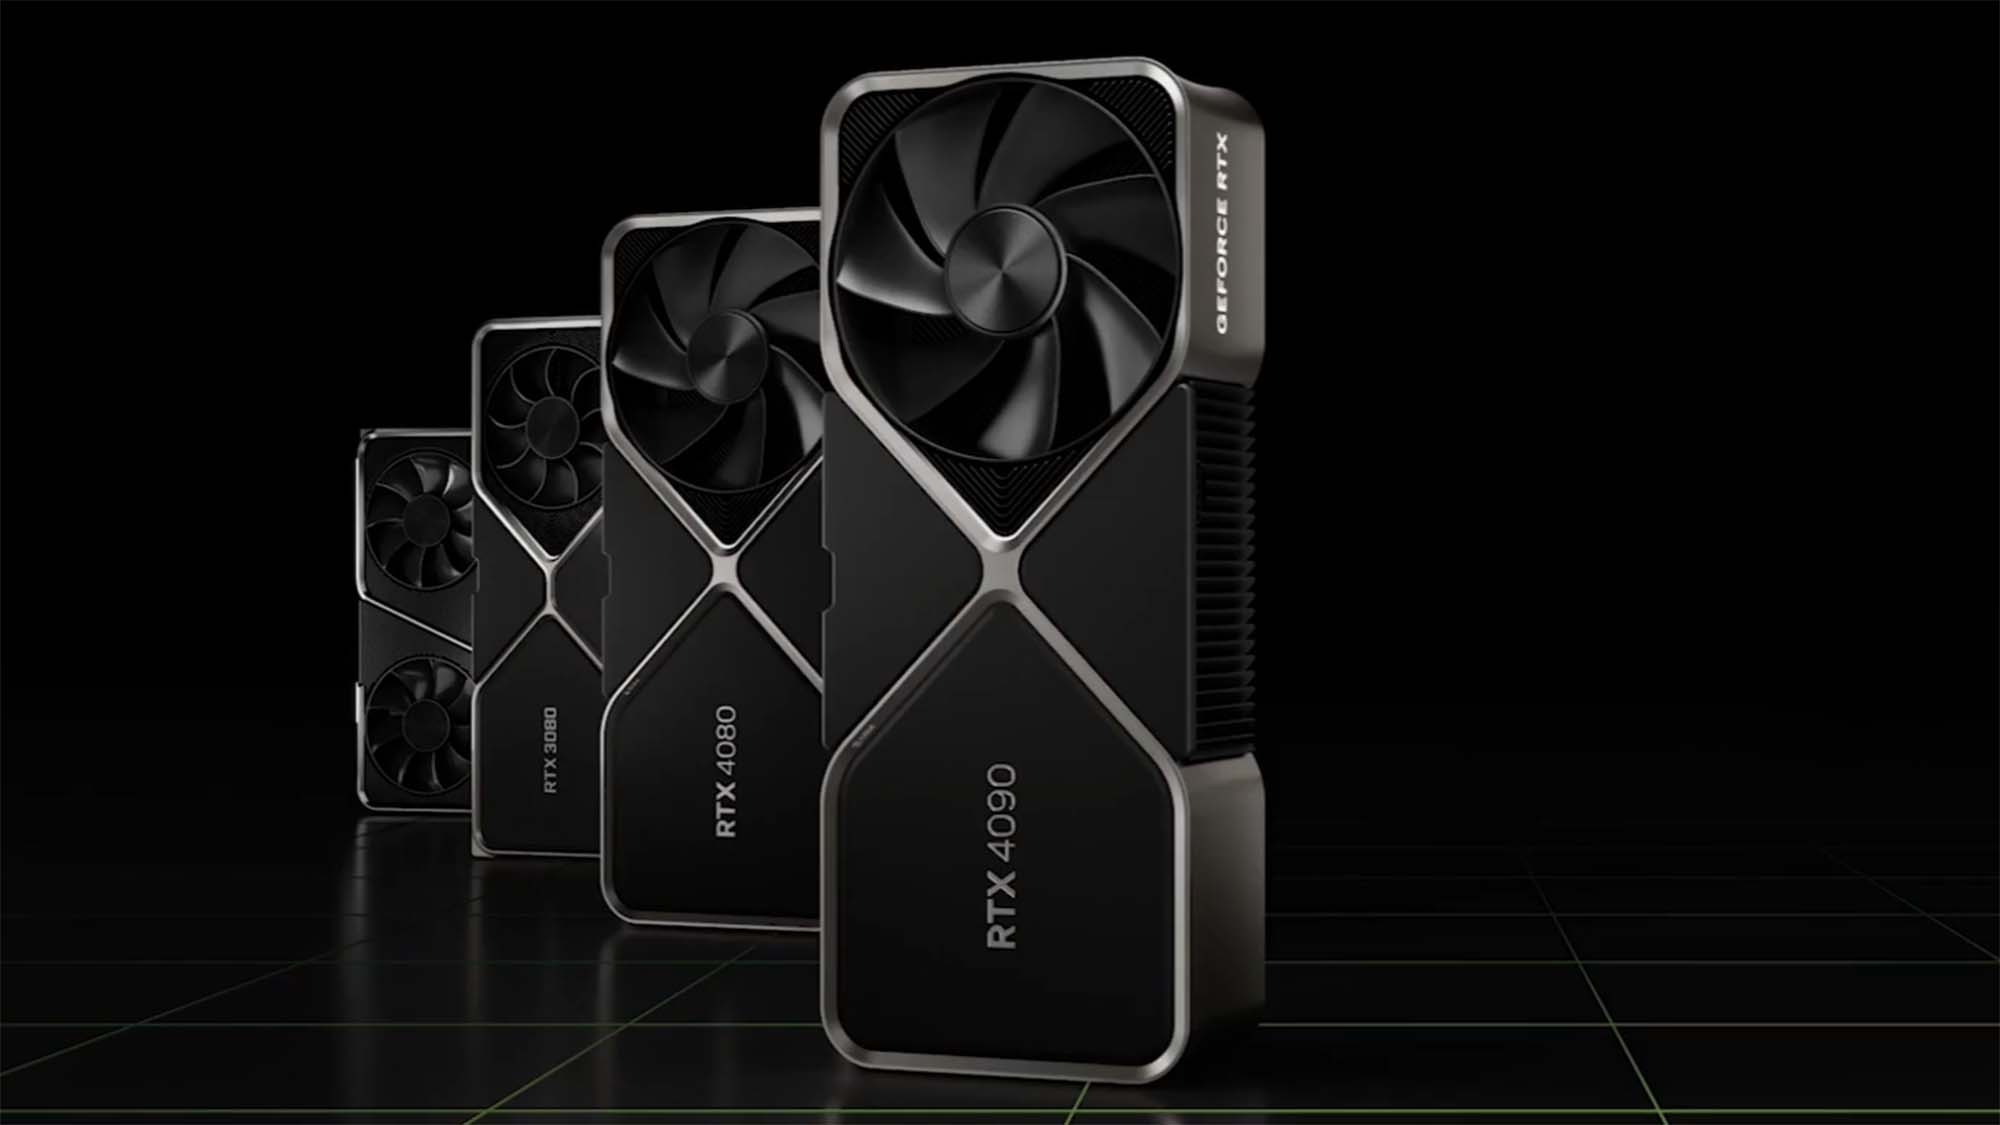 Nvidia GeForce Карты RTX выстроены в ряд